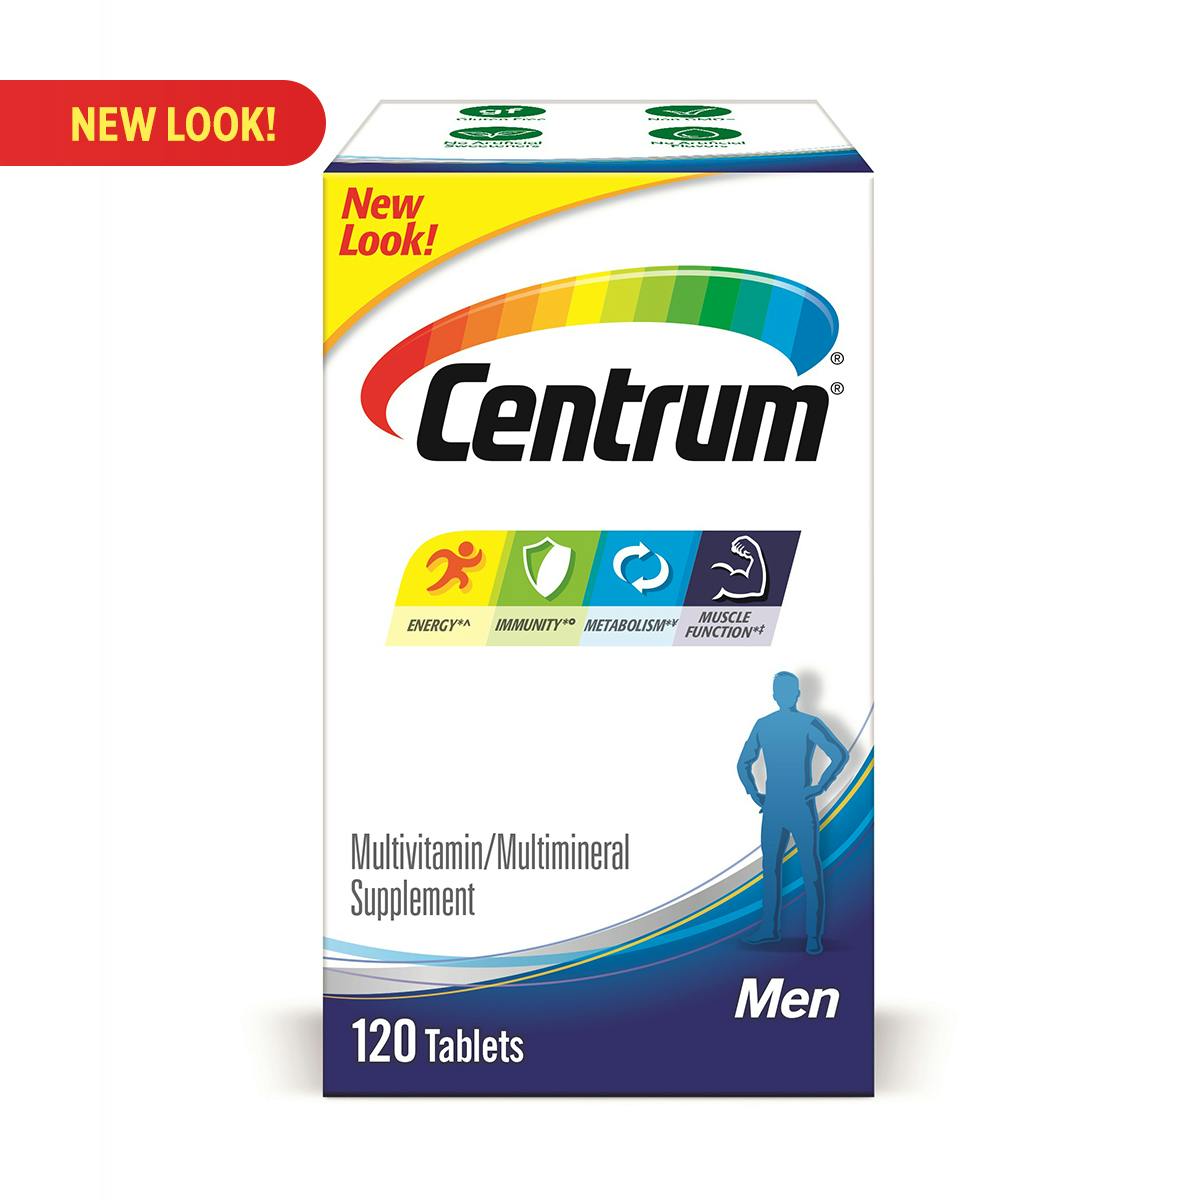 Centrum Men multivitamins - previous packadging